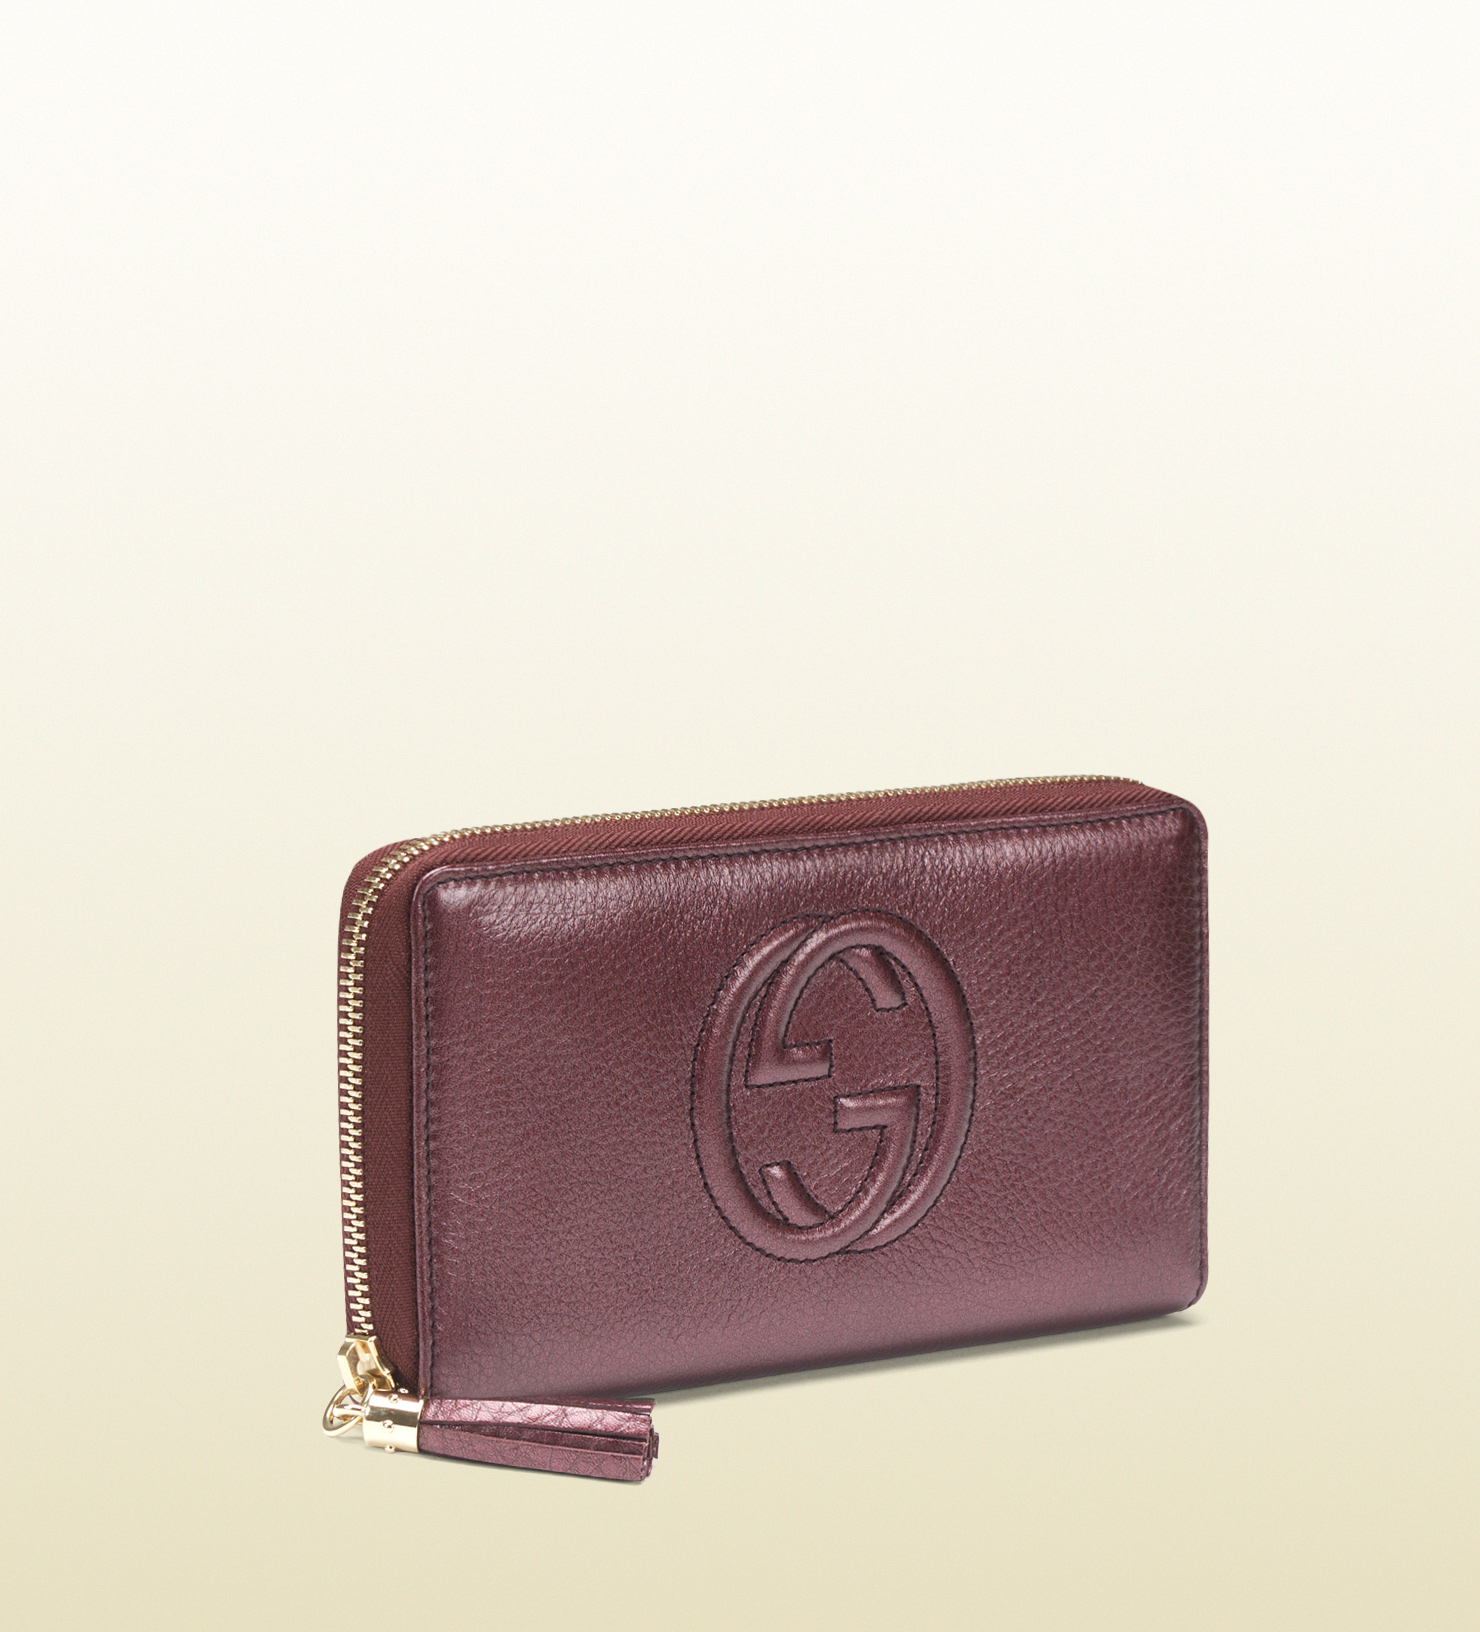 Gucci Soho Metallic Leather Zip Around Wallet in Burgundy (Red) for Men - Lyst